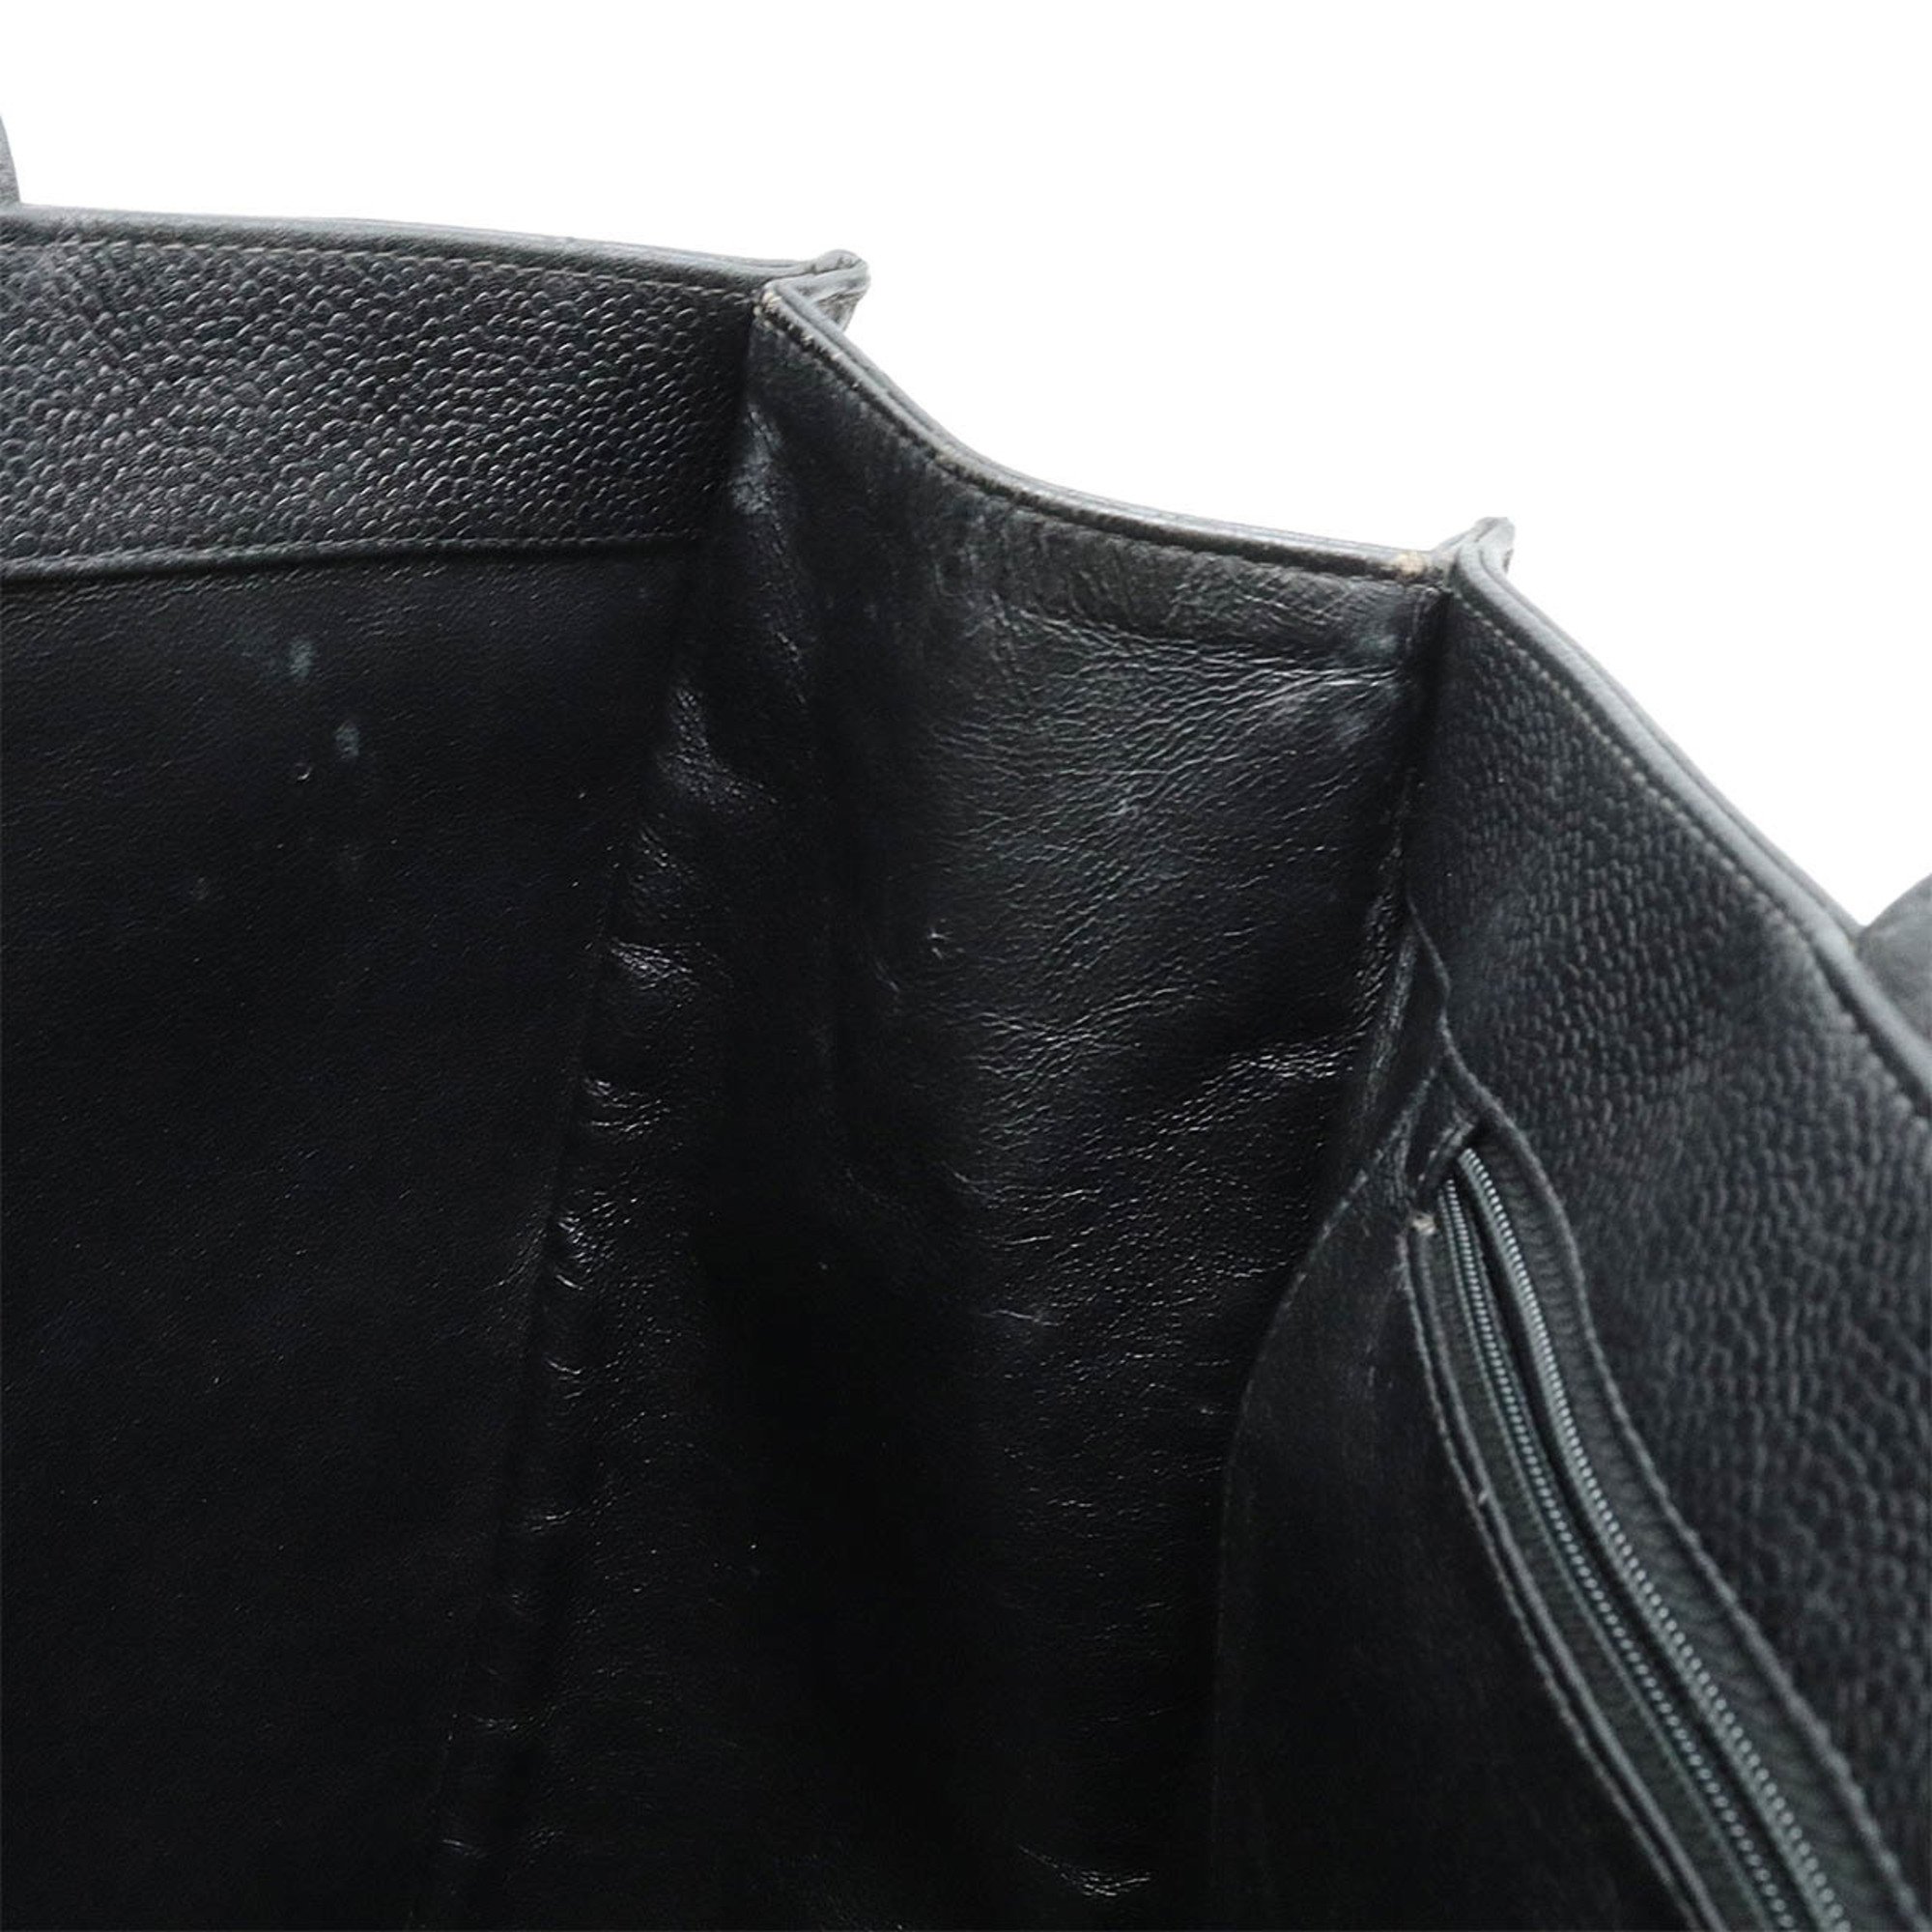 CHANEL Coco Mark Tote Bag Shoulder Caviar Skin Leather Black